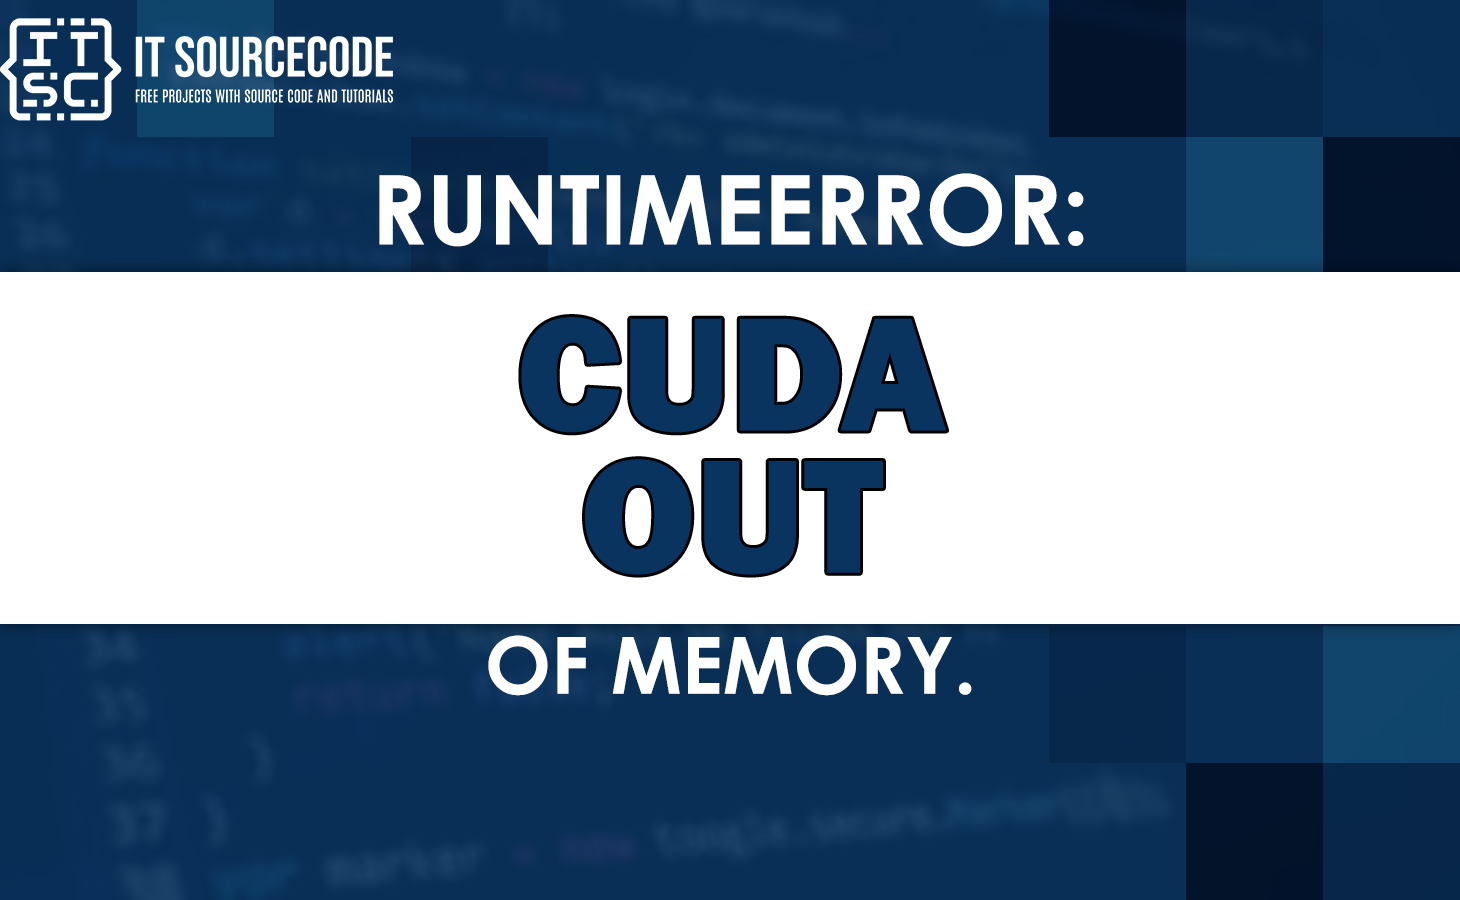 Runtimeerror cuda out of memory.